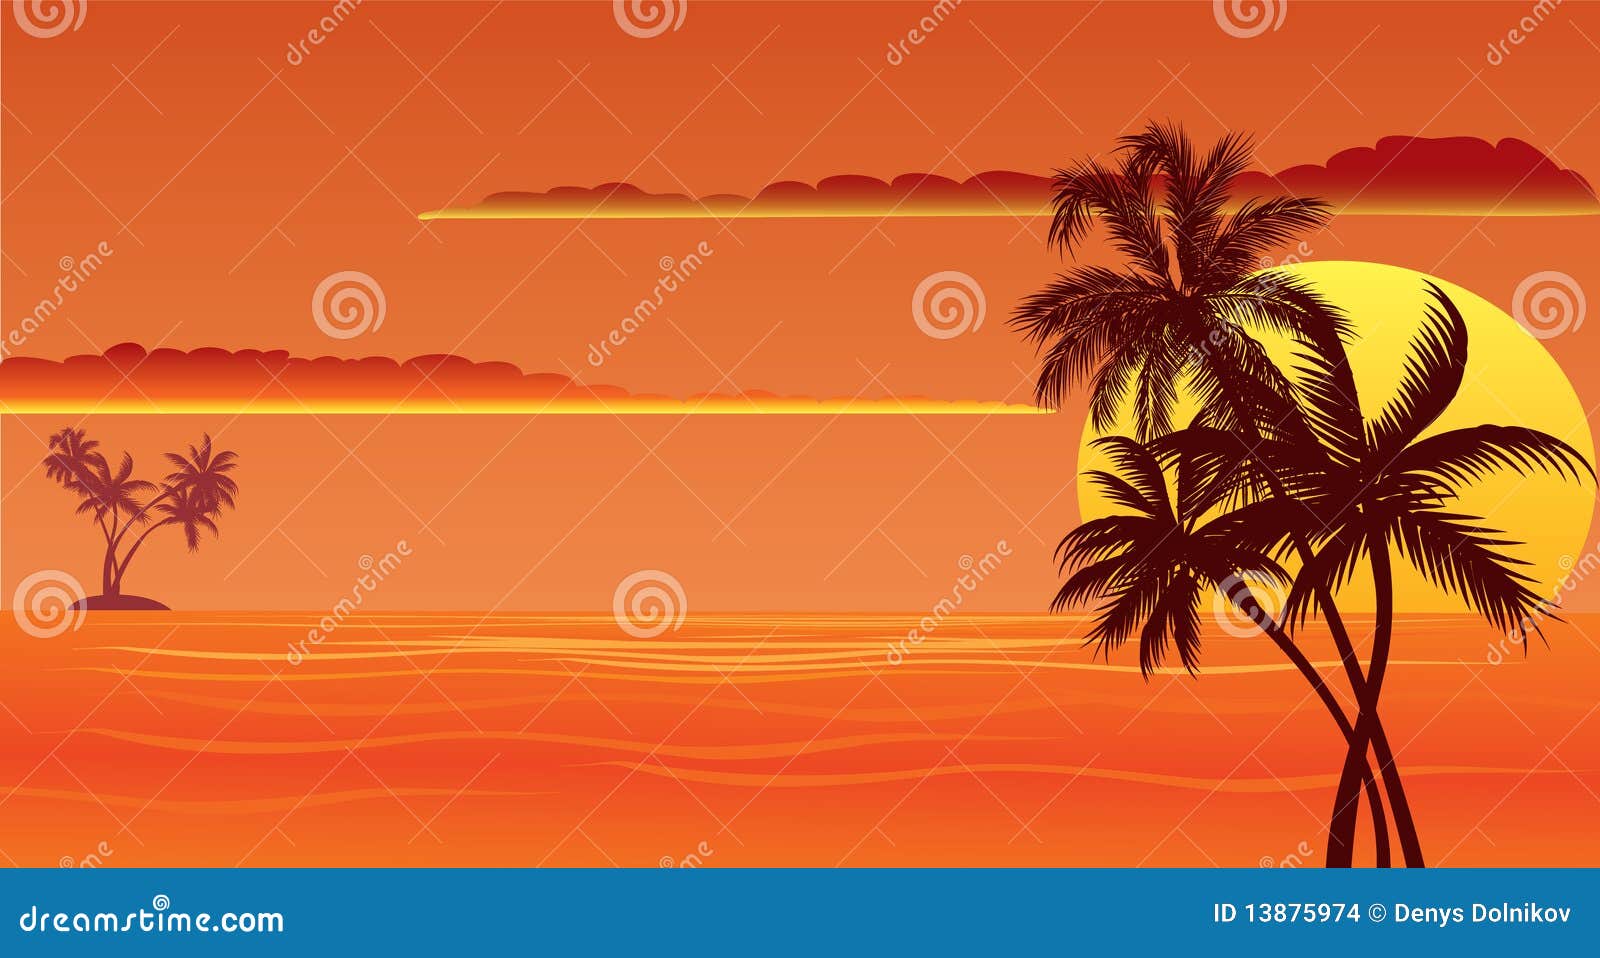 Tropical sunset stock illustration. Illustration of heat - 13875974